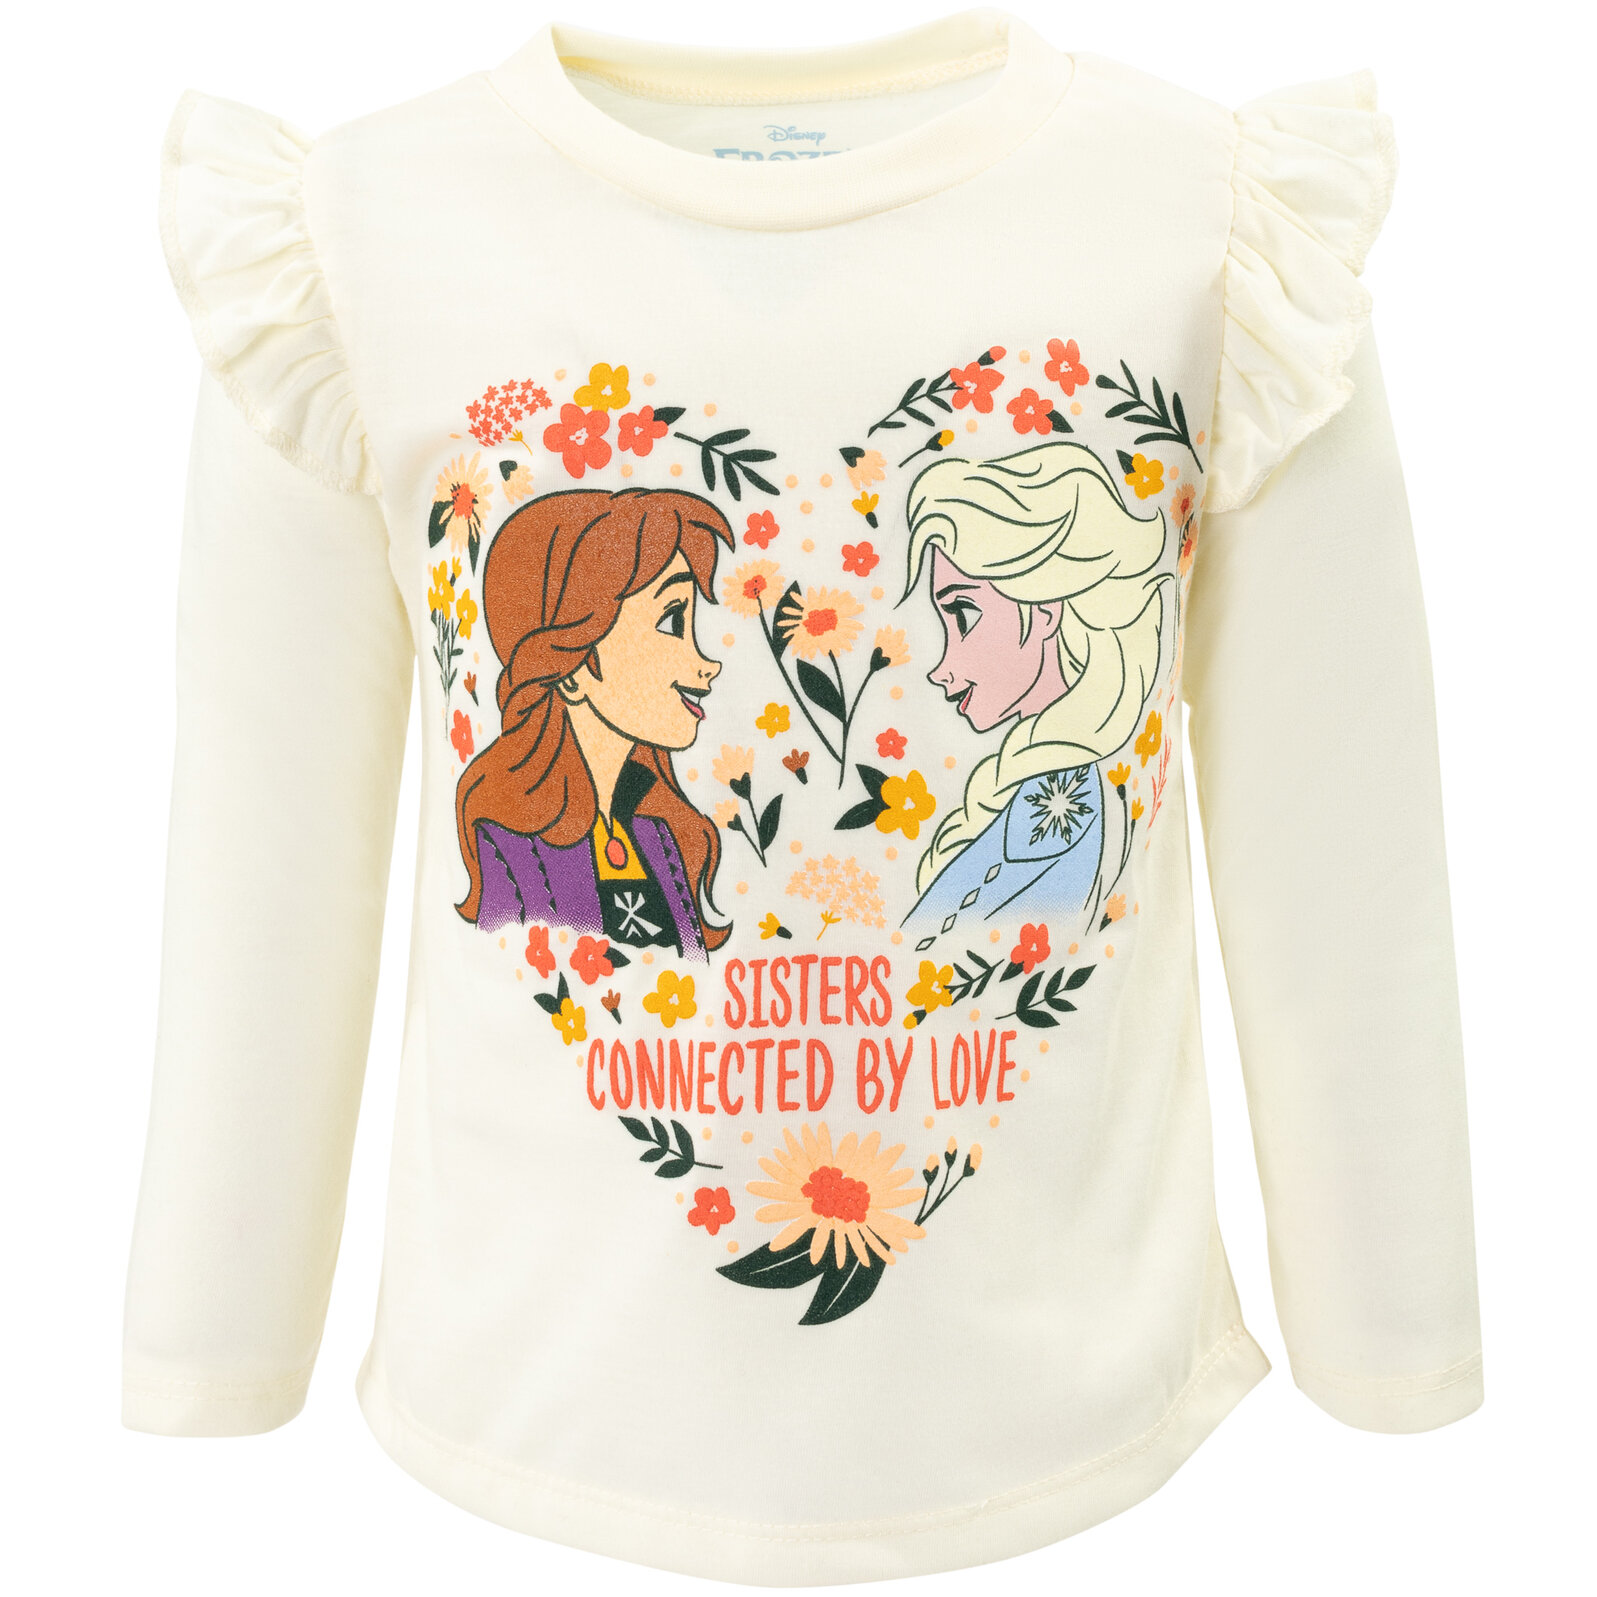 Disney Frozen Elsa Princess Anna Toddler Girls T-Shirt and Leggings Outfit Set Toddler to Little Kid - image 3 of 5